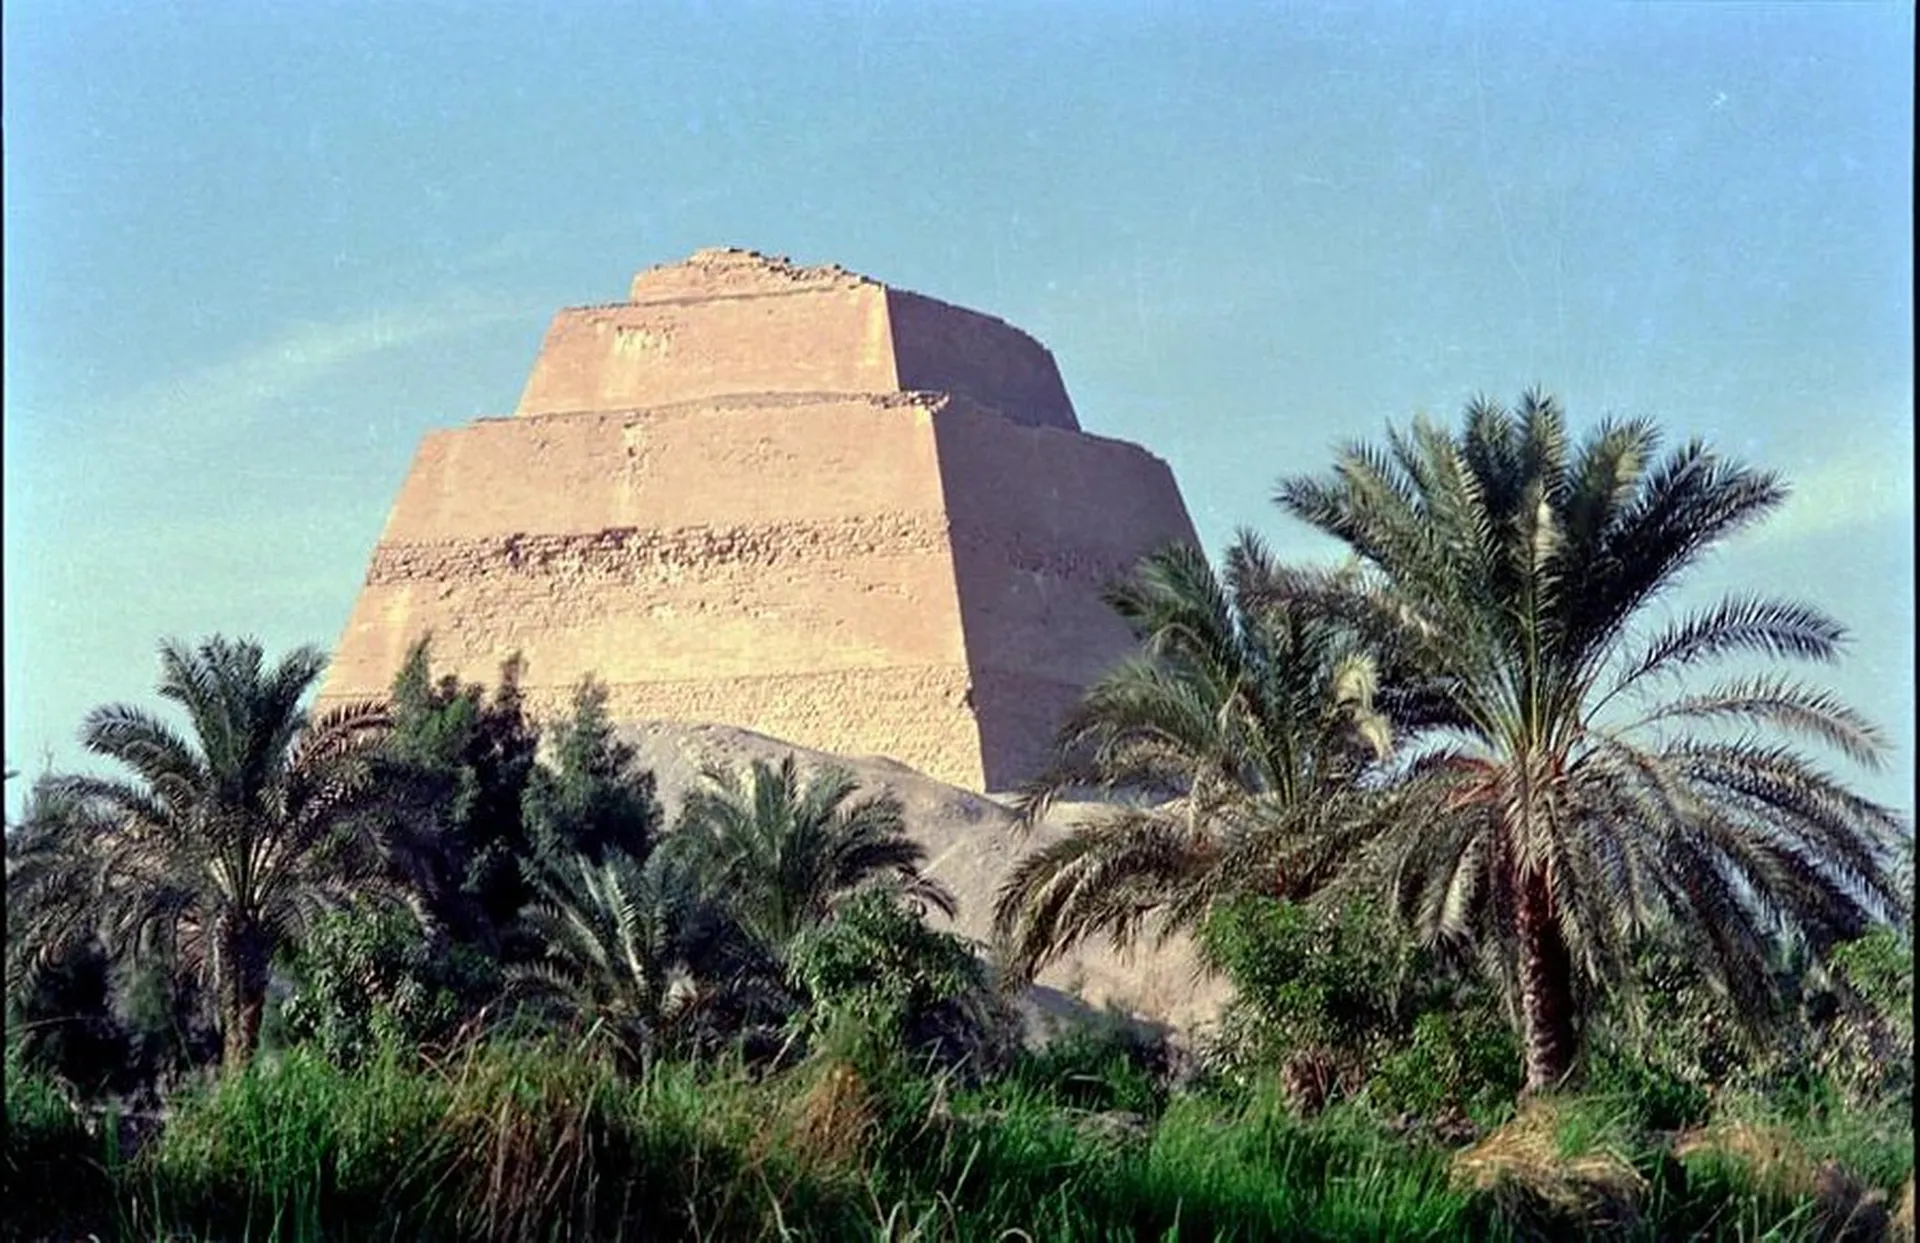 The Pyramid of Sneferu